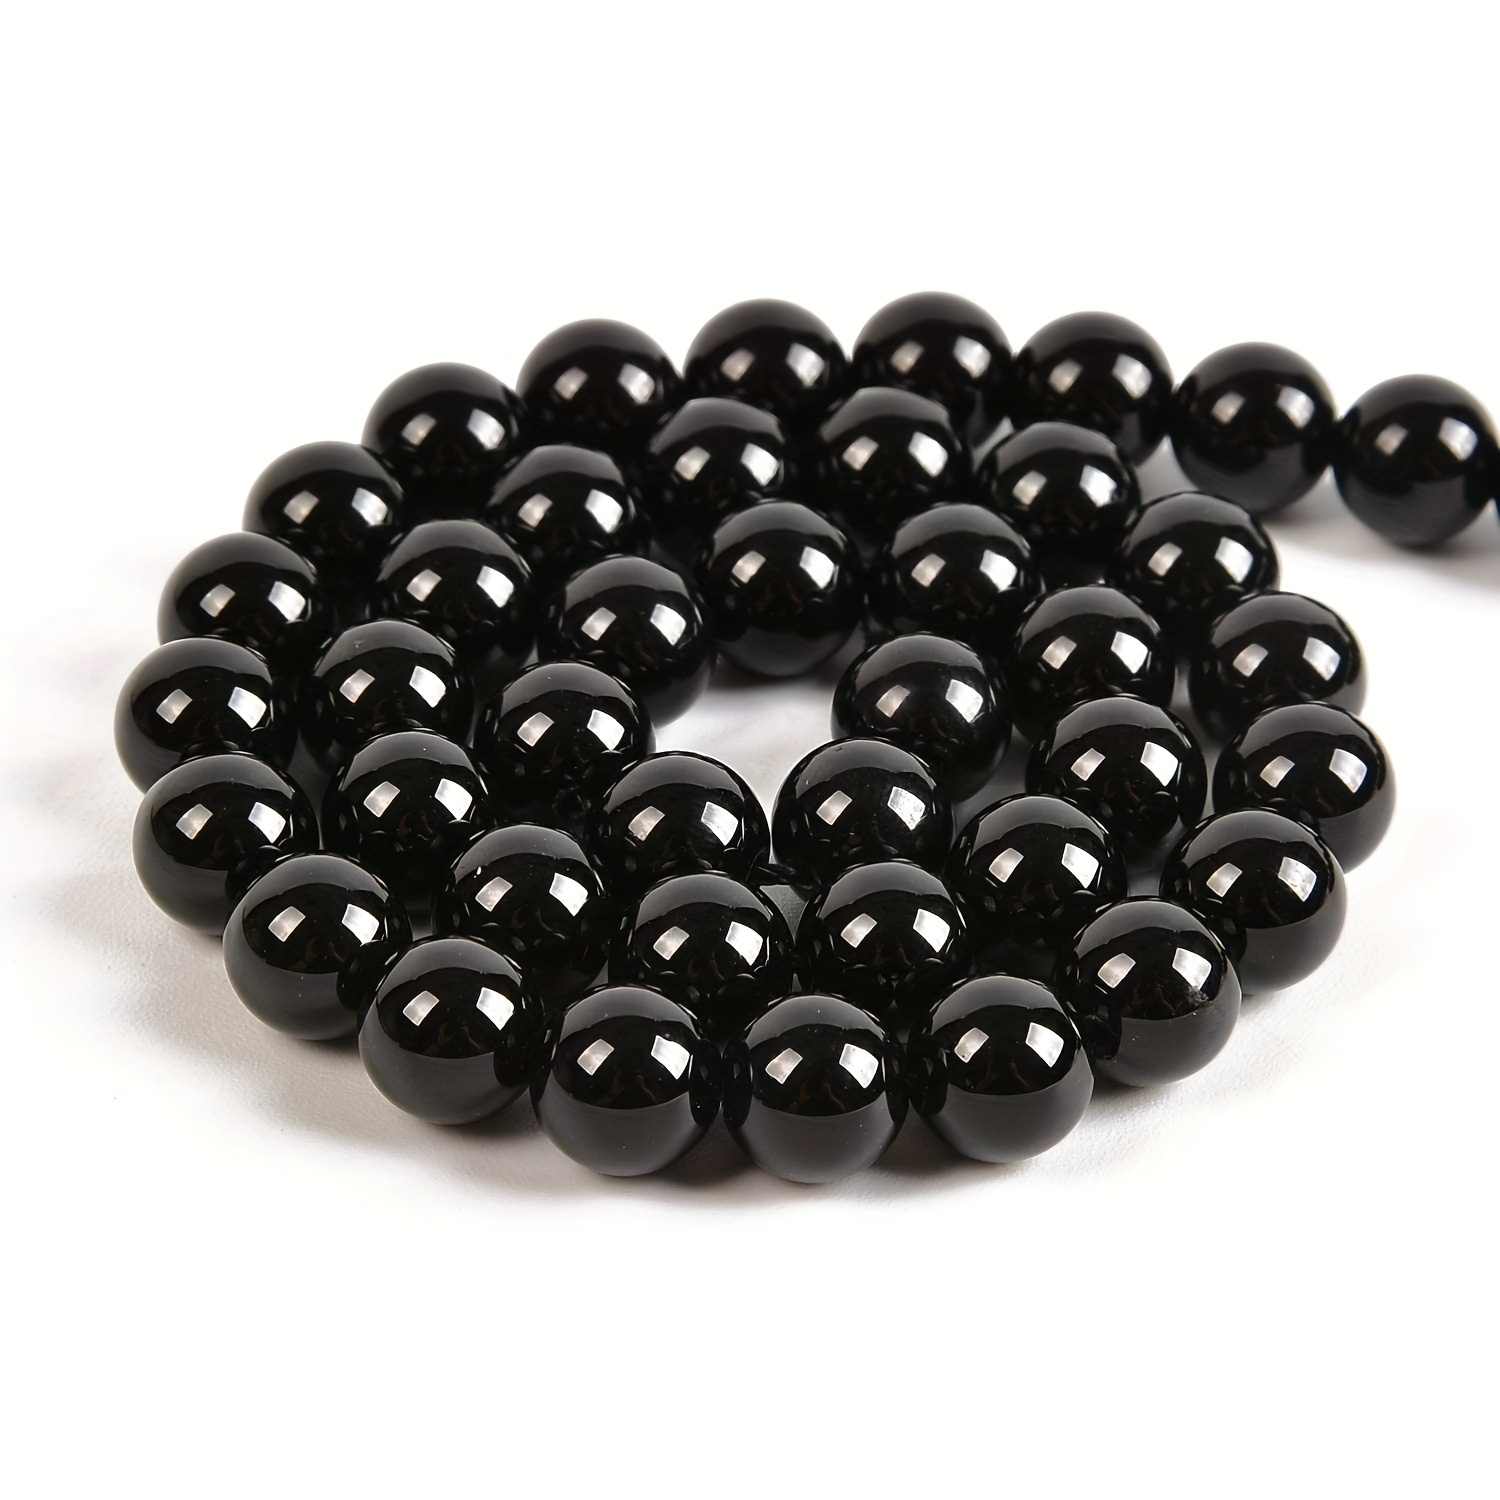 

100pcs Natural Black Onyx Gemstone Beads, 8mm Round Loose Beads For Stretchy Bangle String Necklace Jewelry Making Stone Bracelet